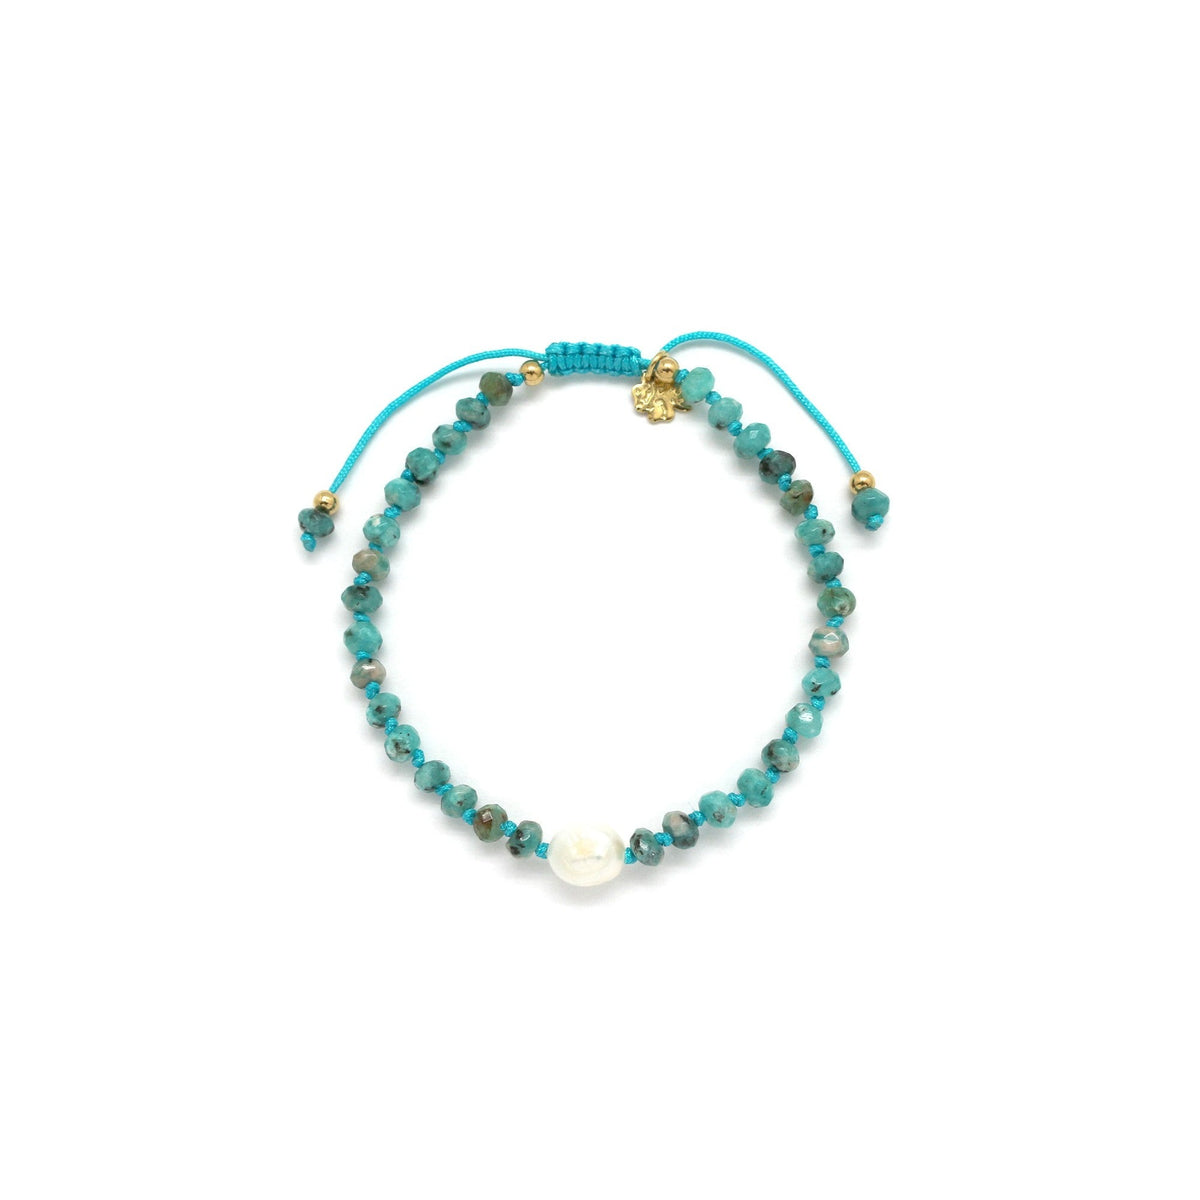 Adjustable turquoise bracelet with aqua pearl